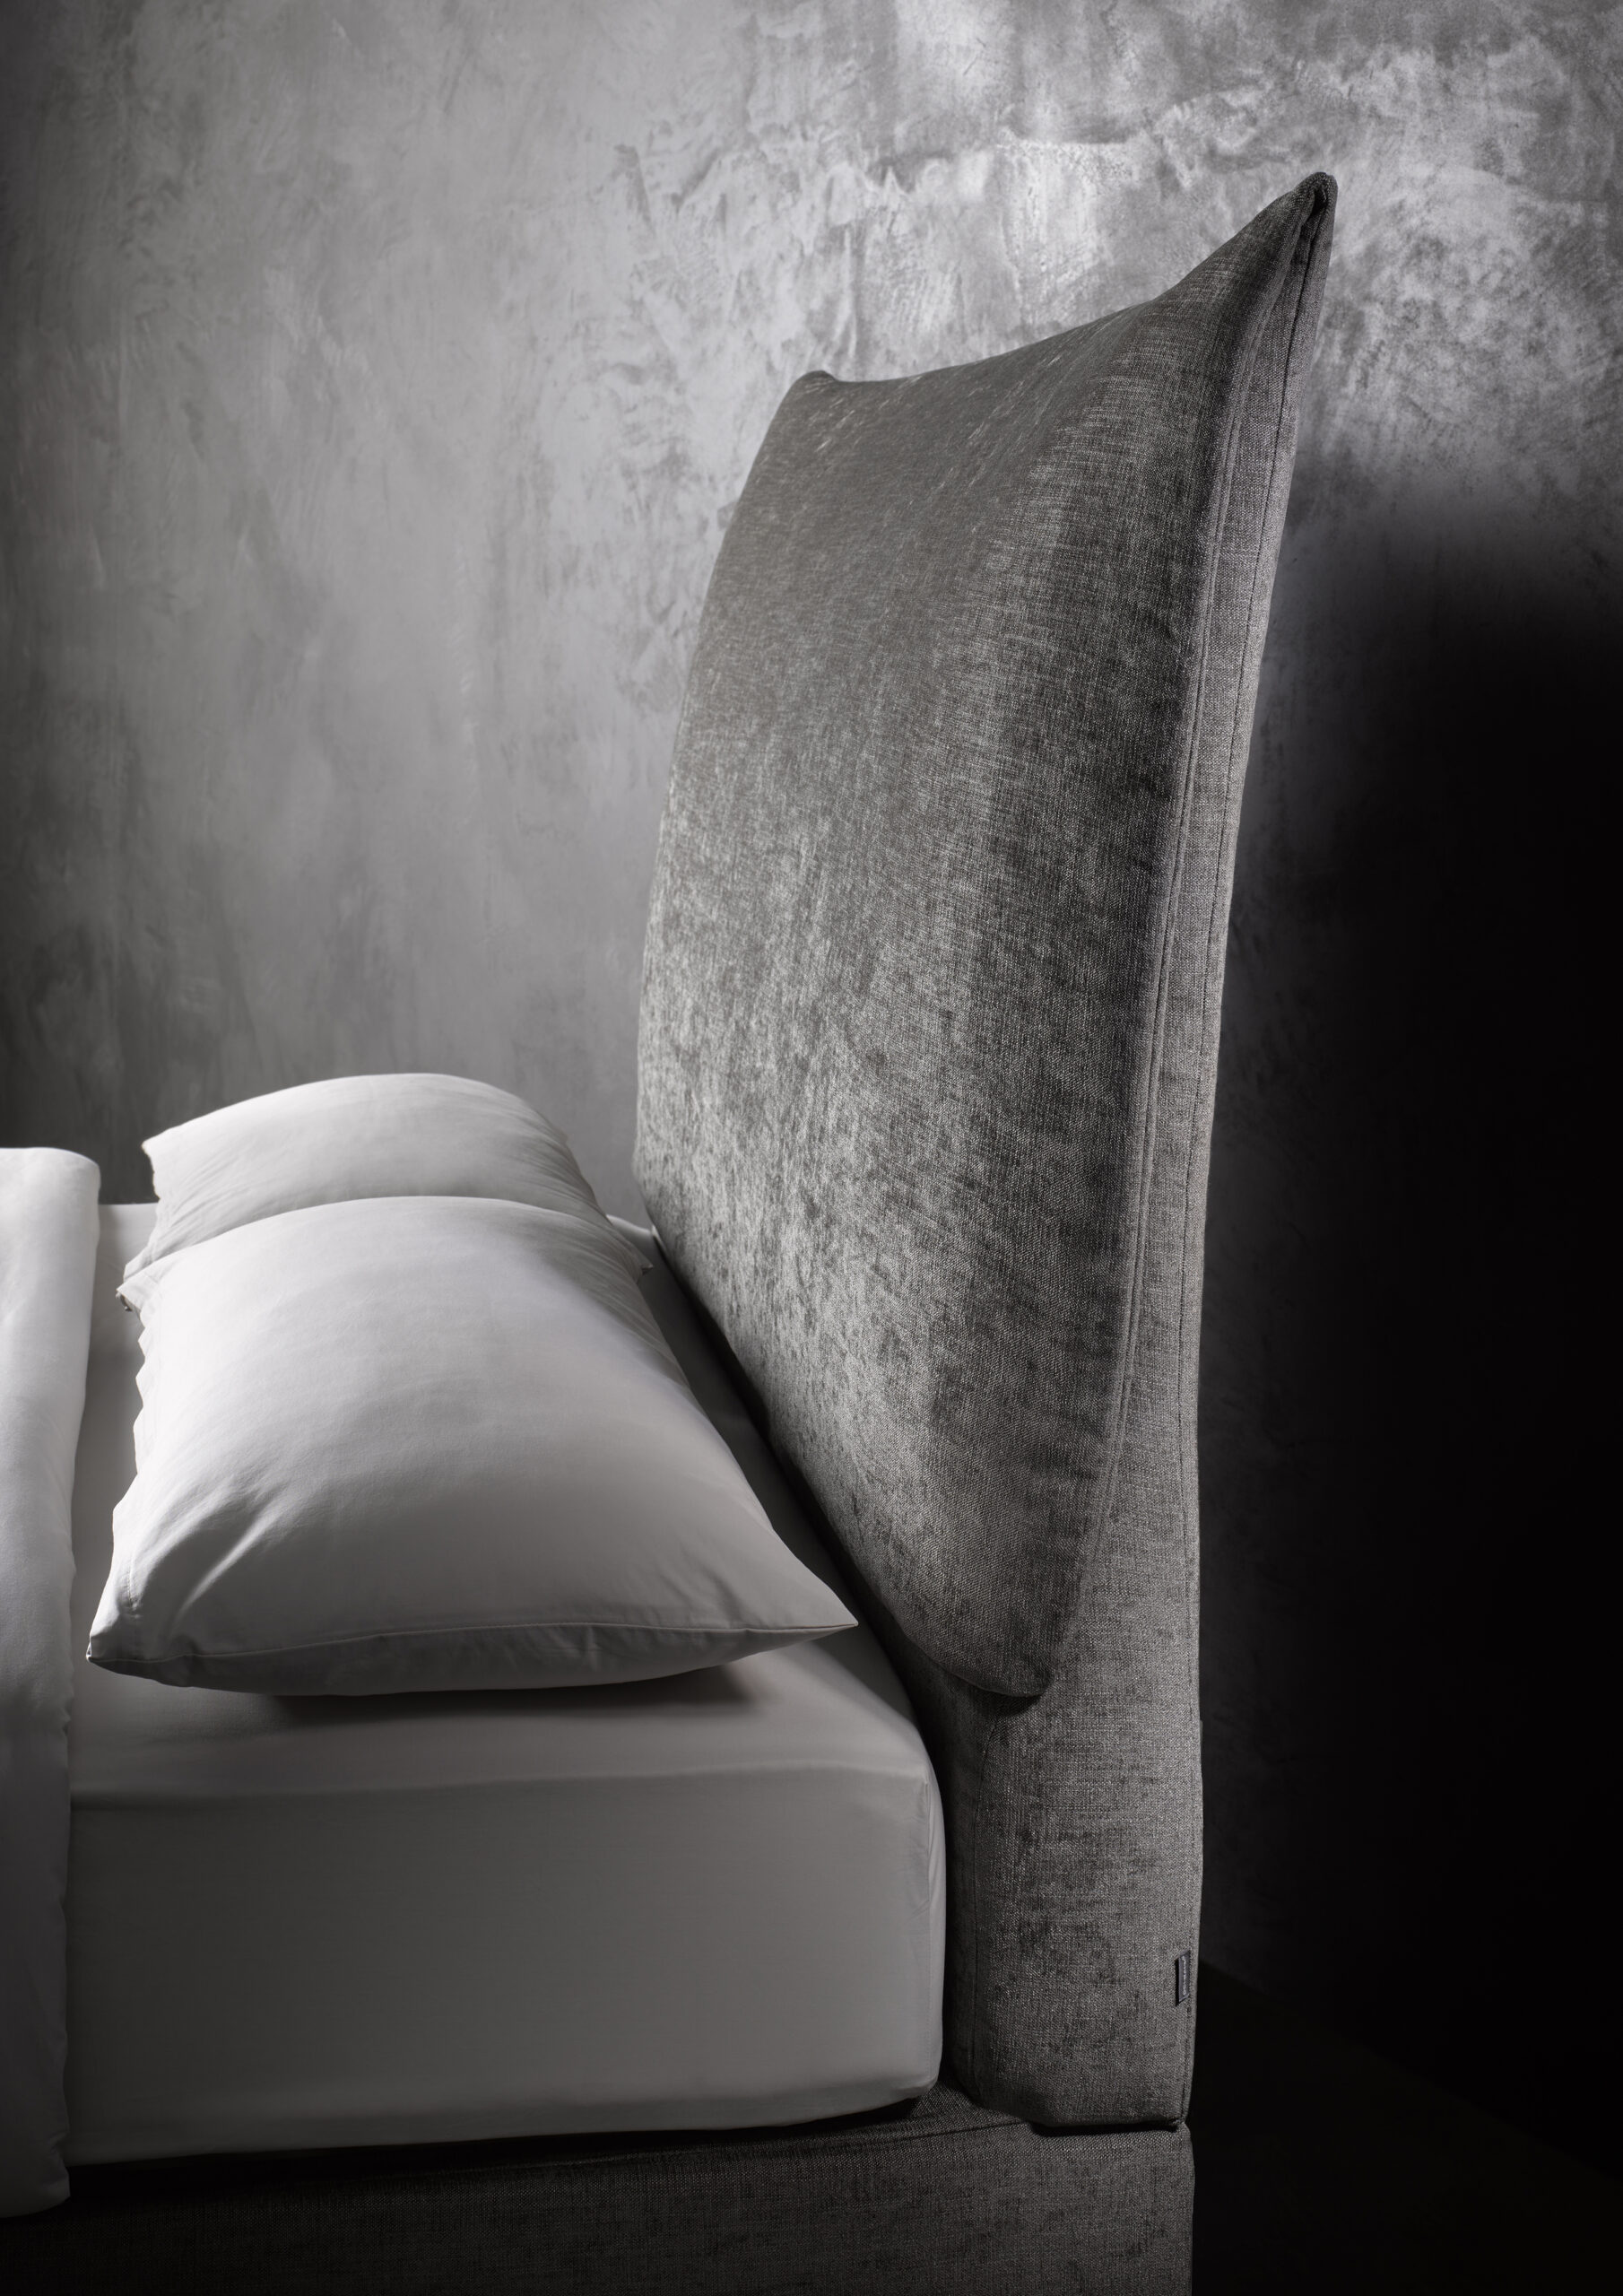 Headboard detail of Arco bed designed by Debiasi Sandri for Schramm